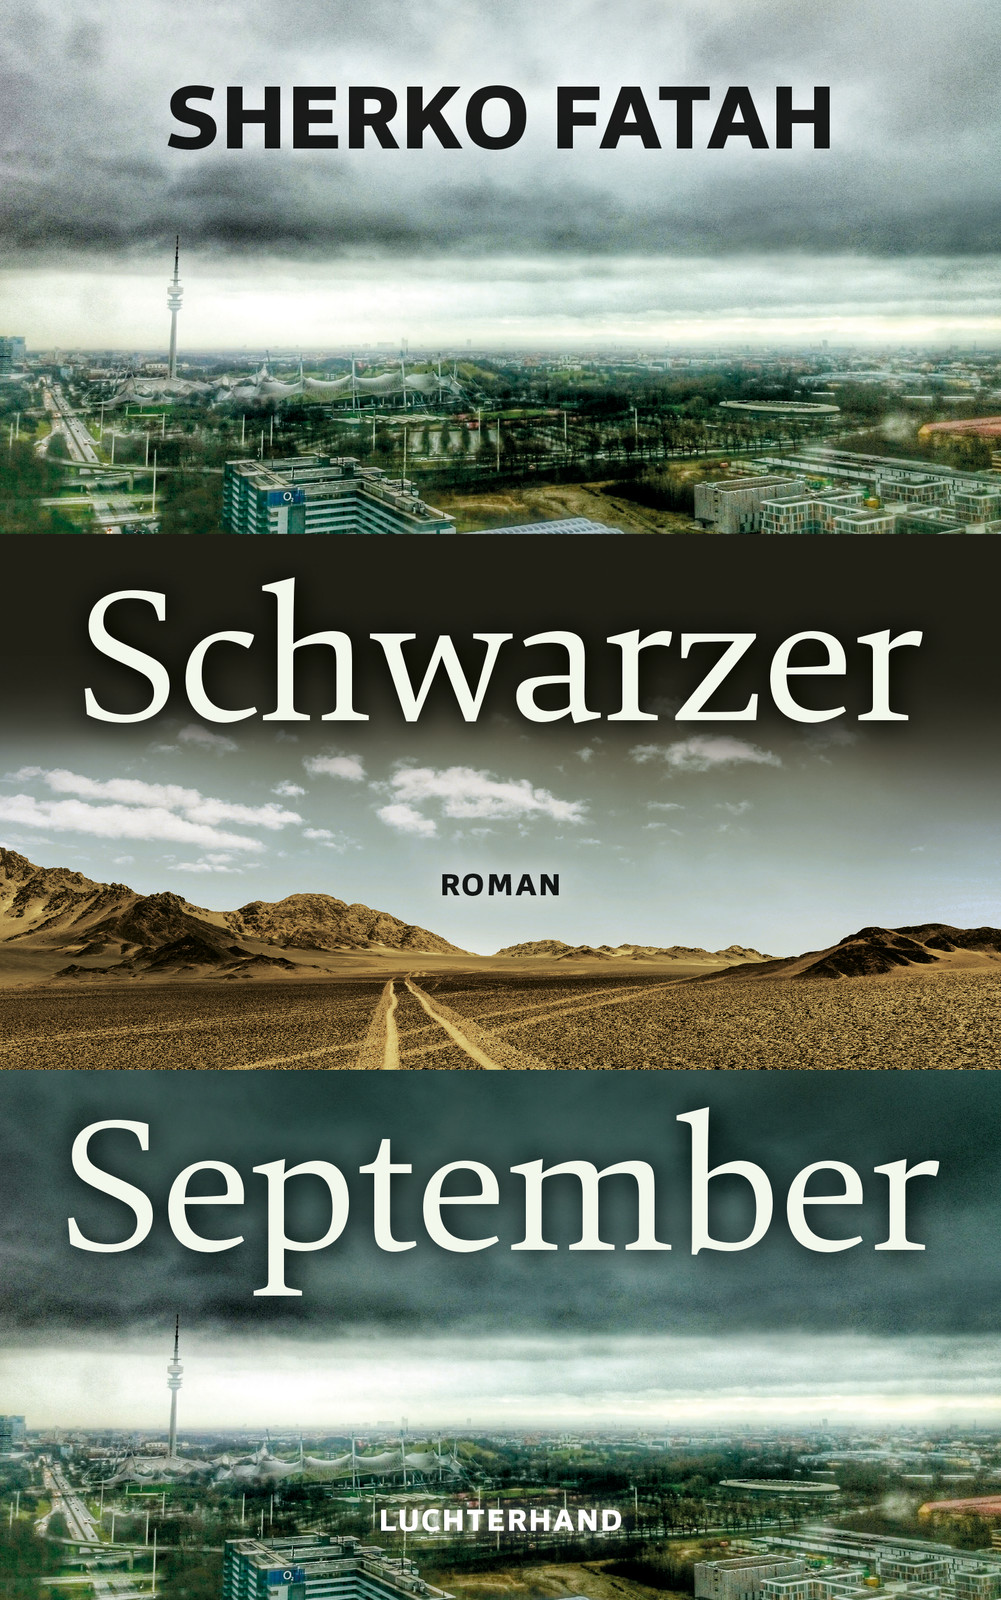 Buchcover Sherko Fatah: "Schwarzer September" im Luchterhand Verlag 